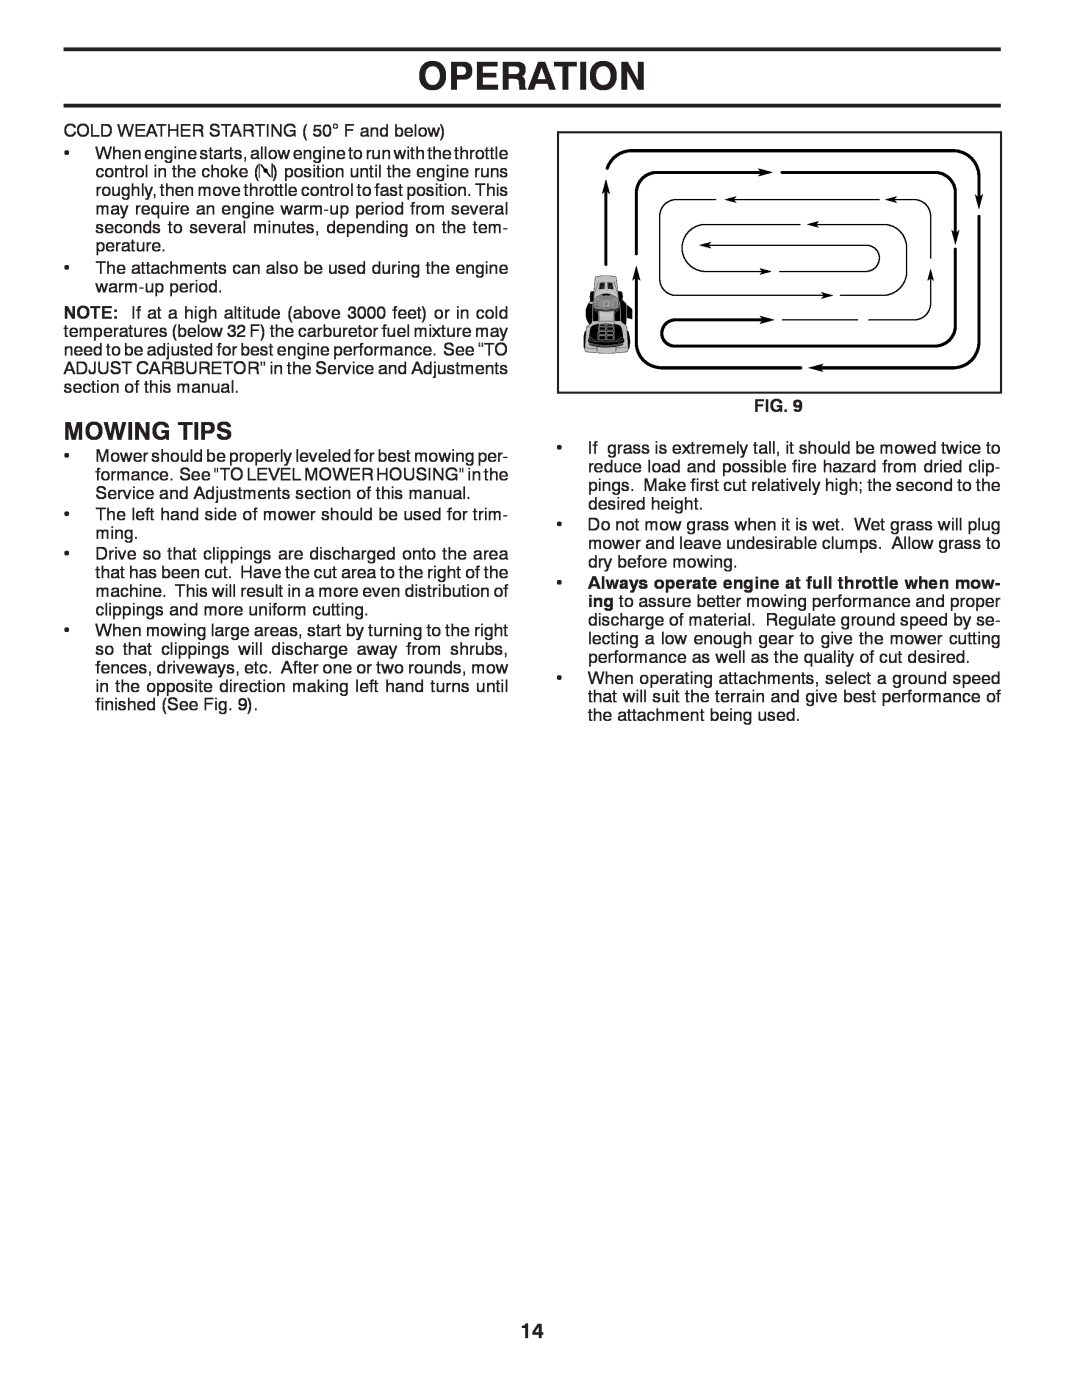 Poulan pb19546lt manual Mowing Tips, Operation 